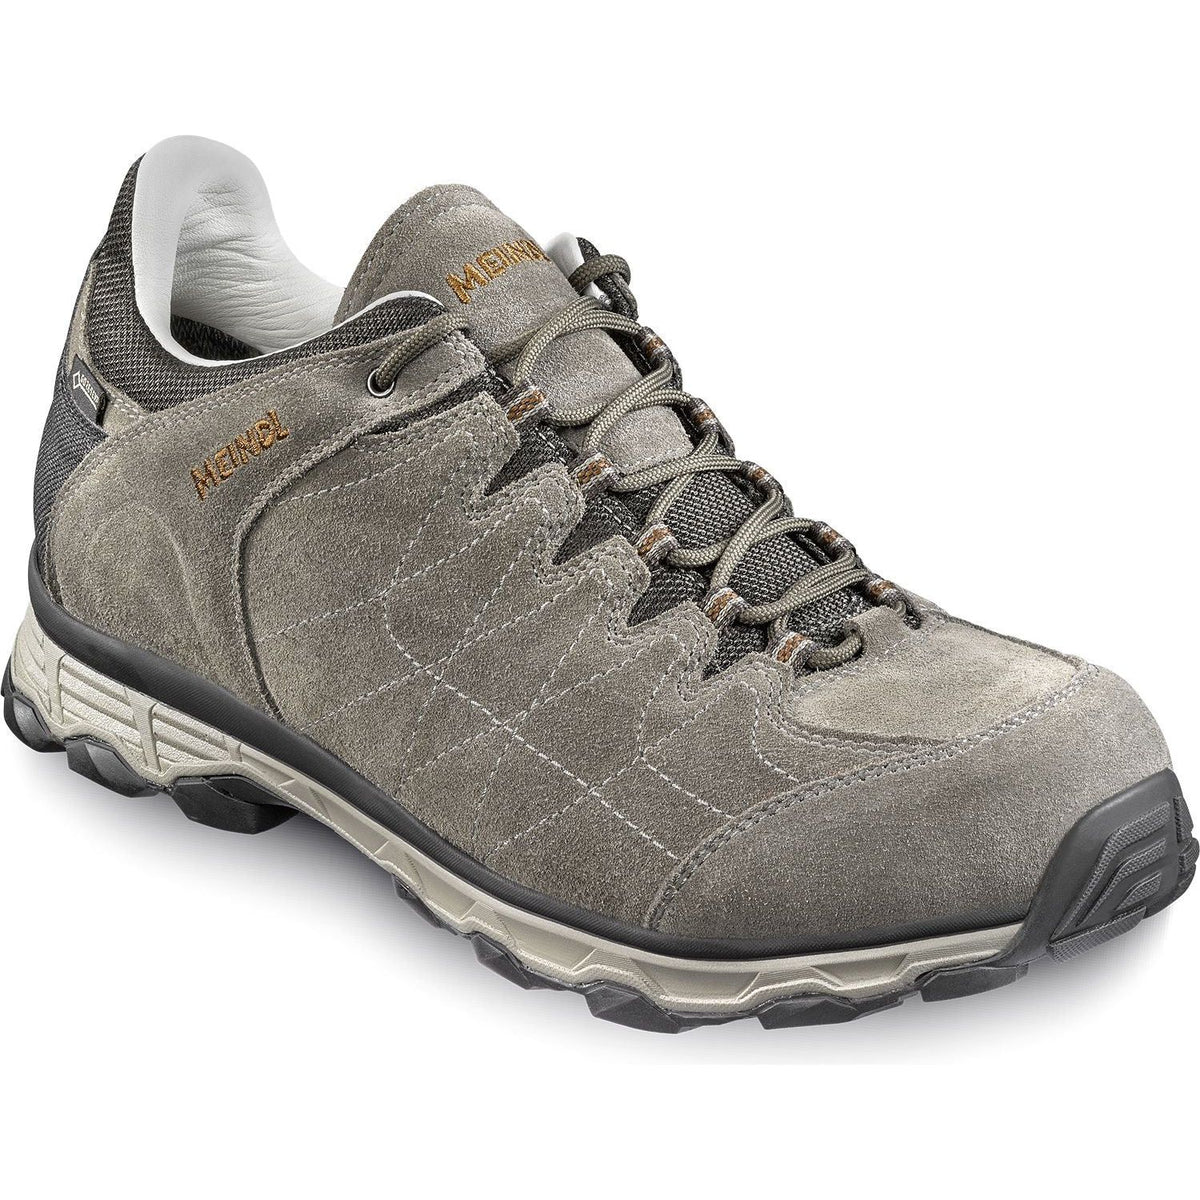 Meindl Glasgow GTX Wide Fit Walking Shoes - Brown